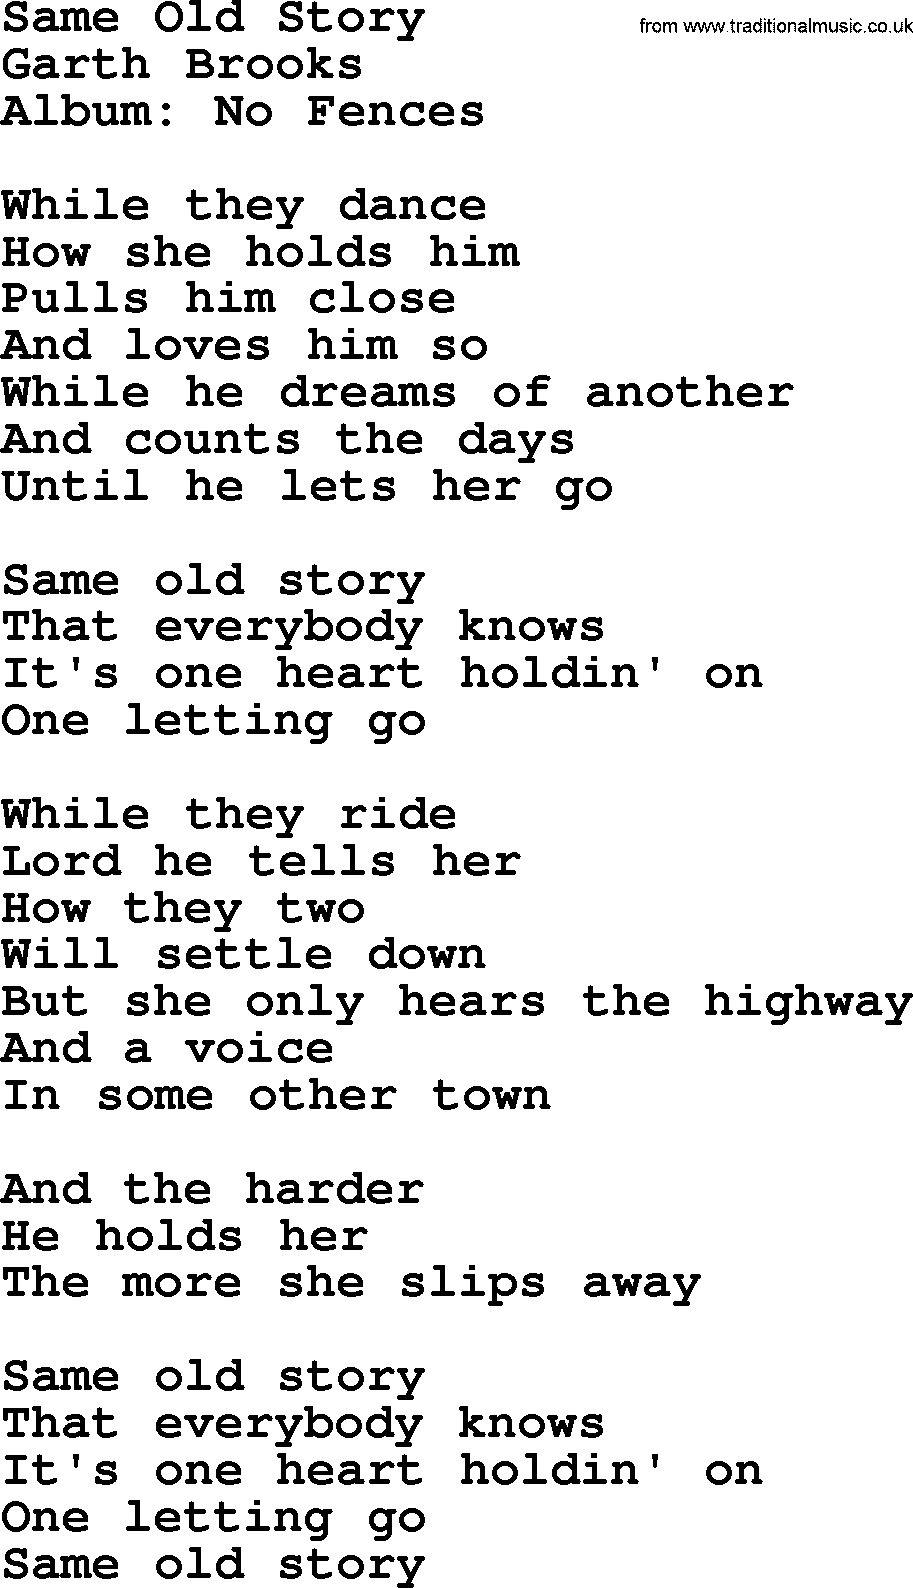 Garth Brooks song: Same Old Story, lyrics